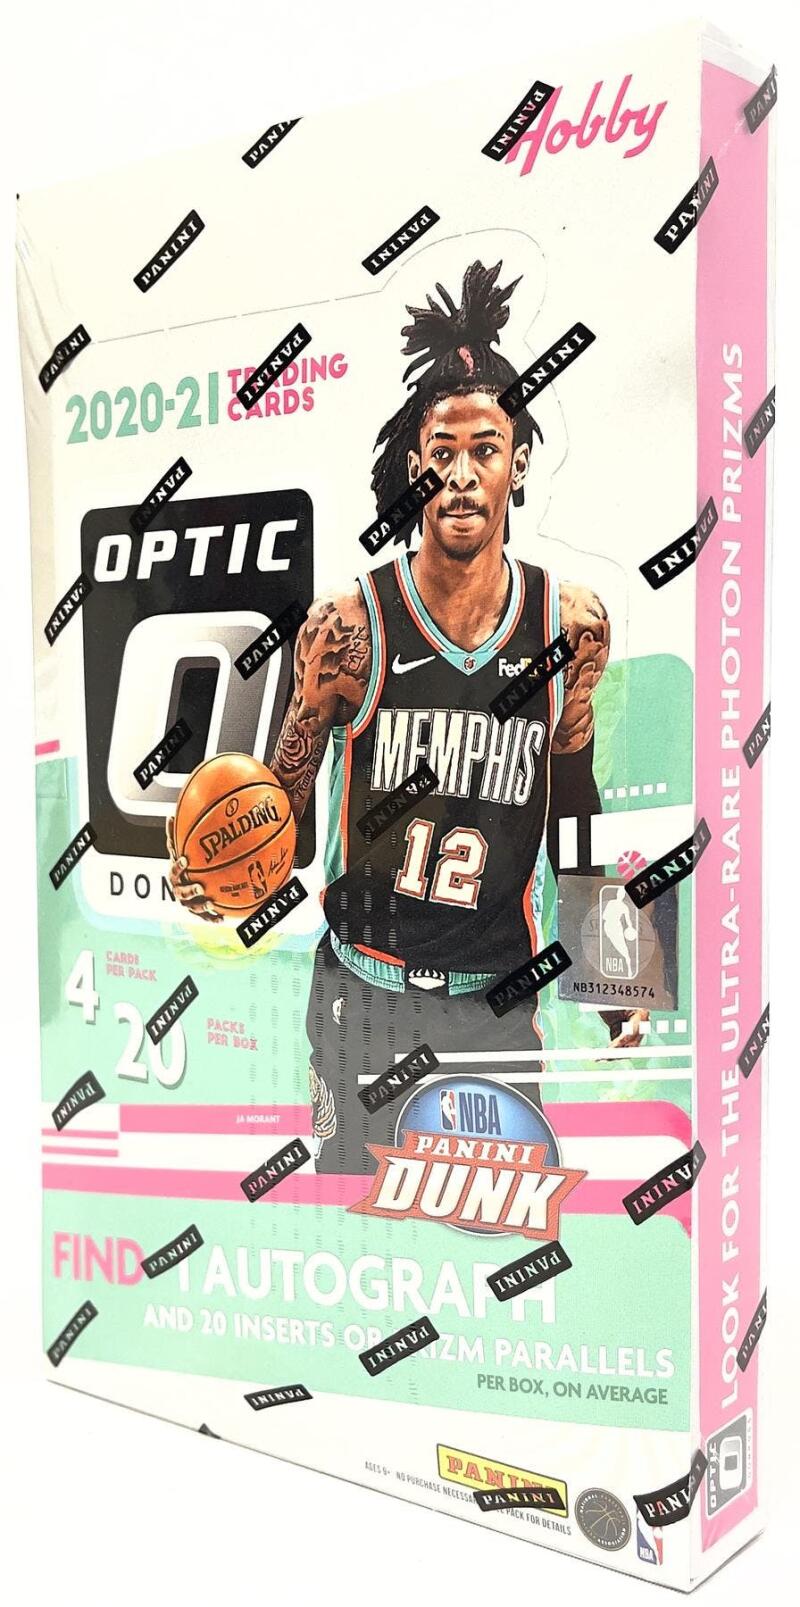 2020-21 Panini Donruss Optic Basketball Hobby Box Image 2